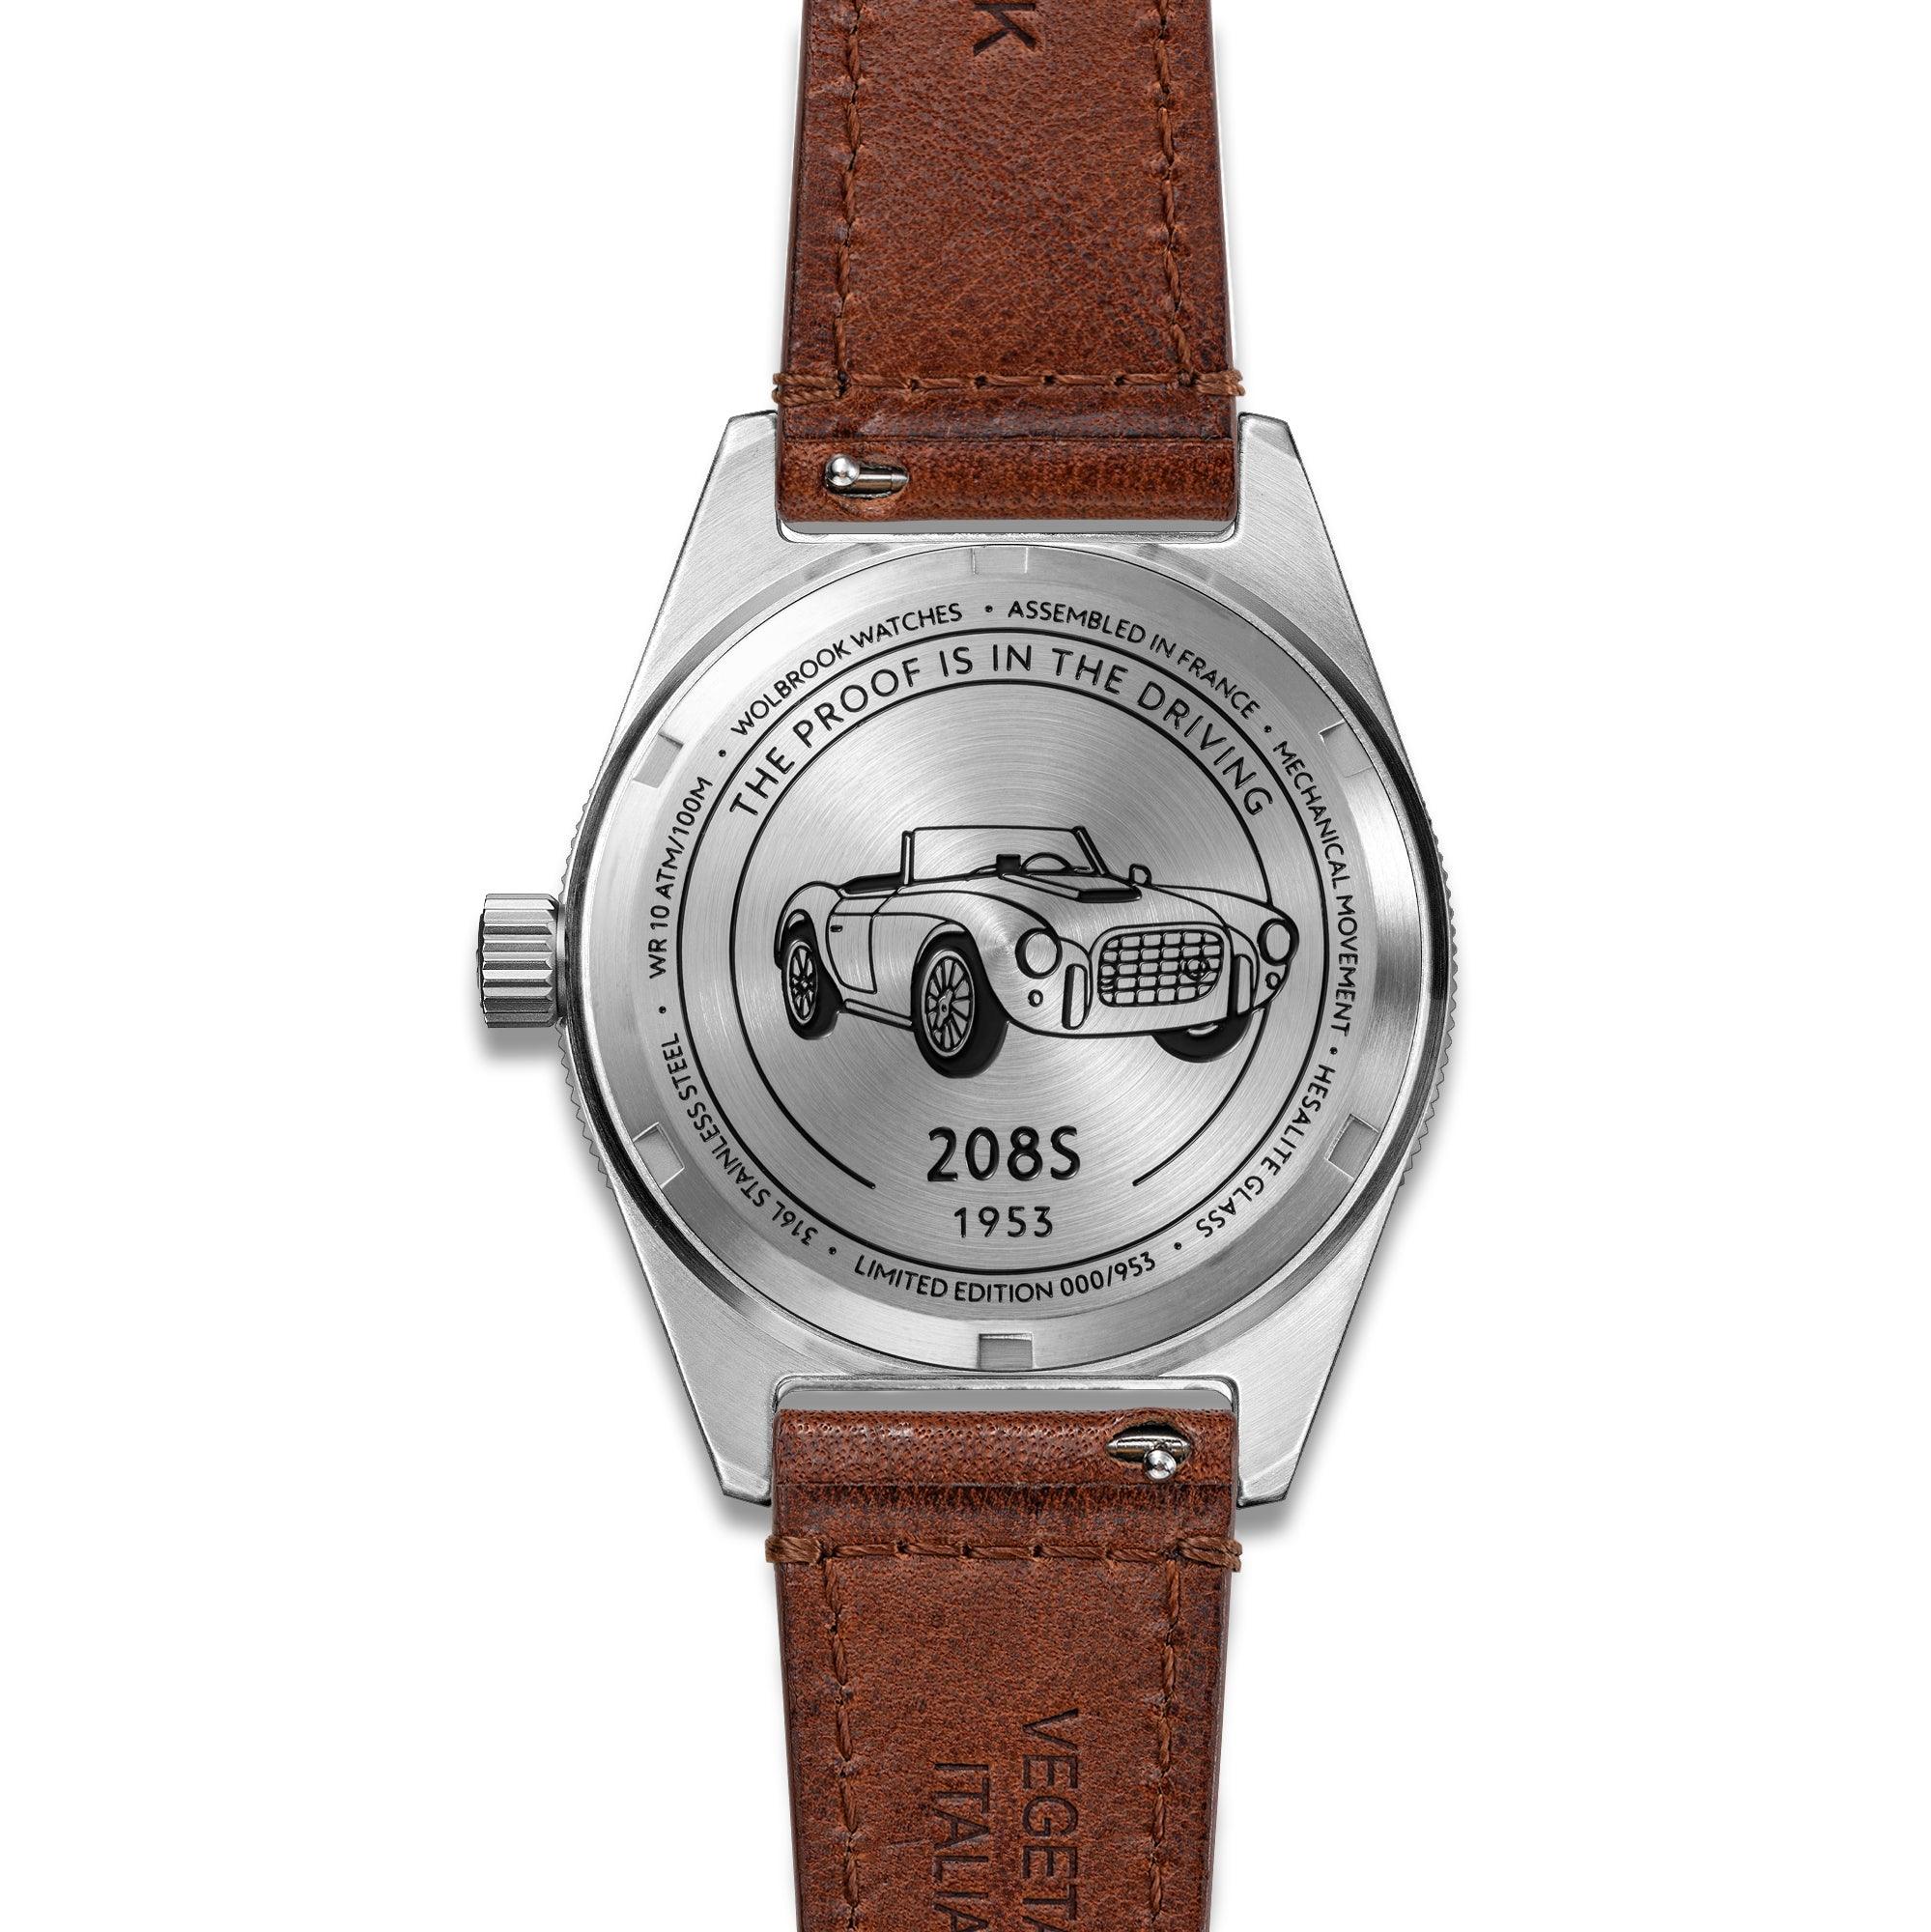 Grand Prix Professional Racing Watch – Siata 208S 1953 Limited 